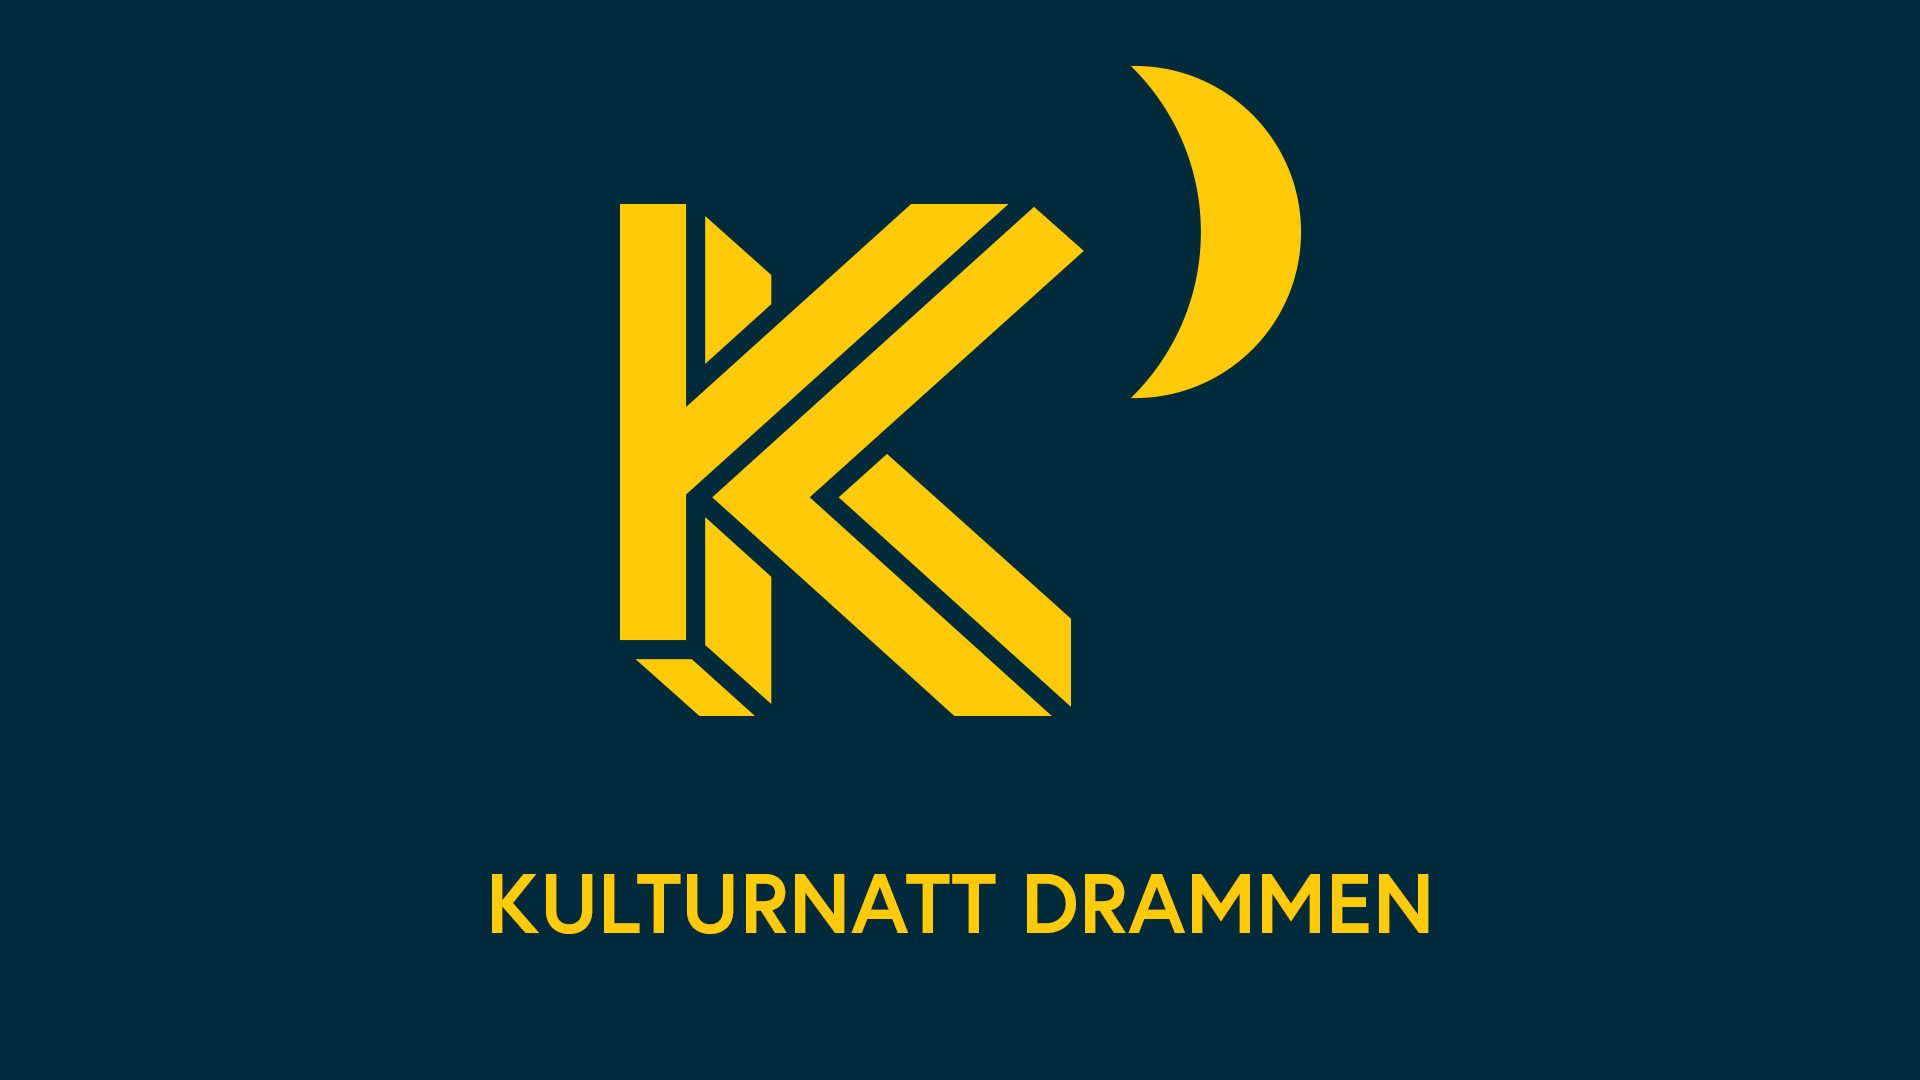 Kulturnatt Drammen